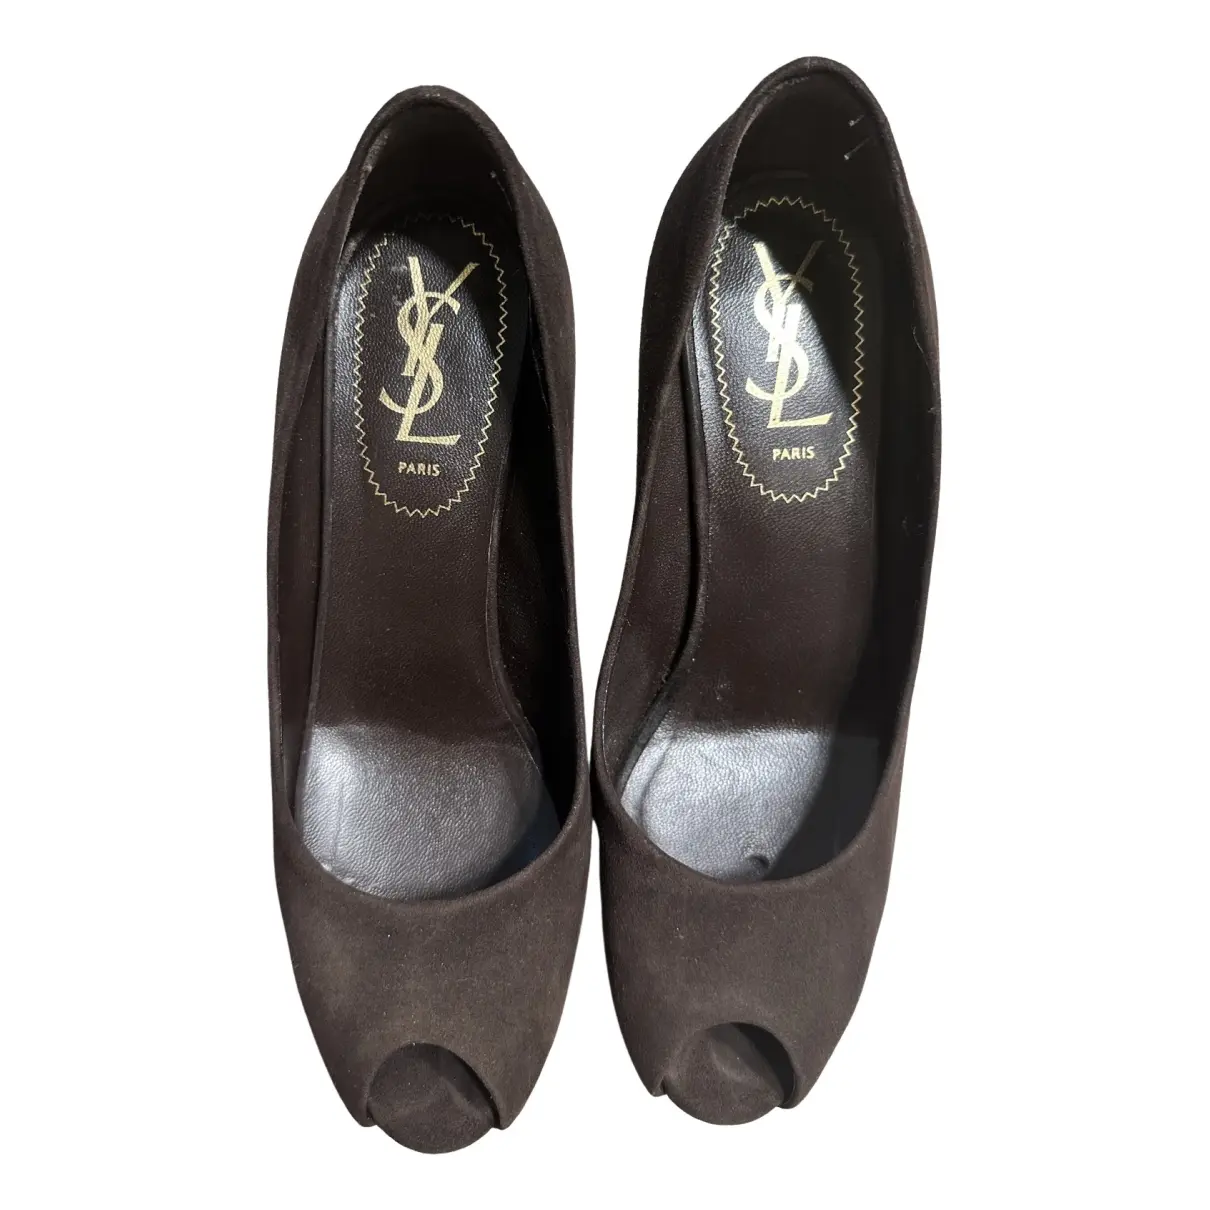 Sandal Yves Saint Laurent - Vintage